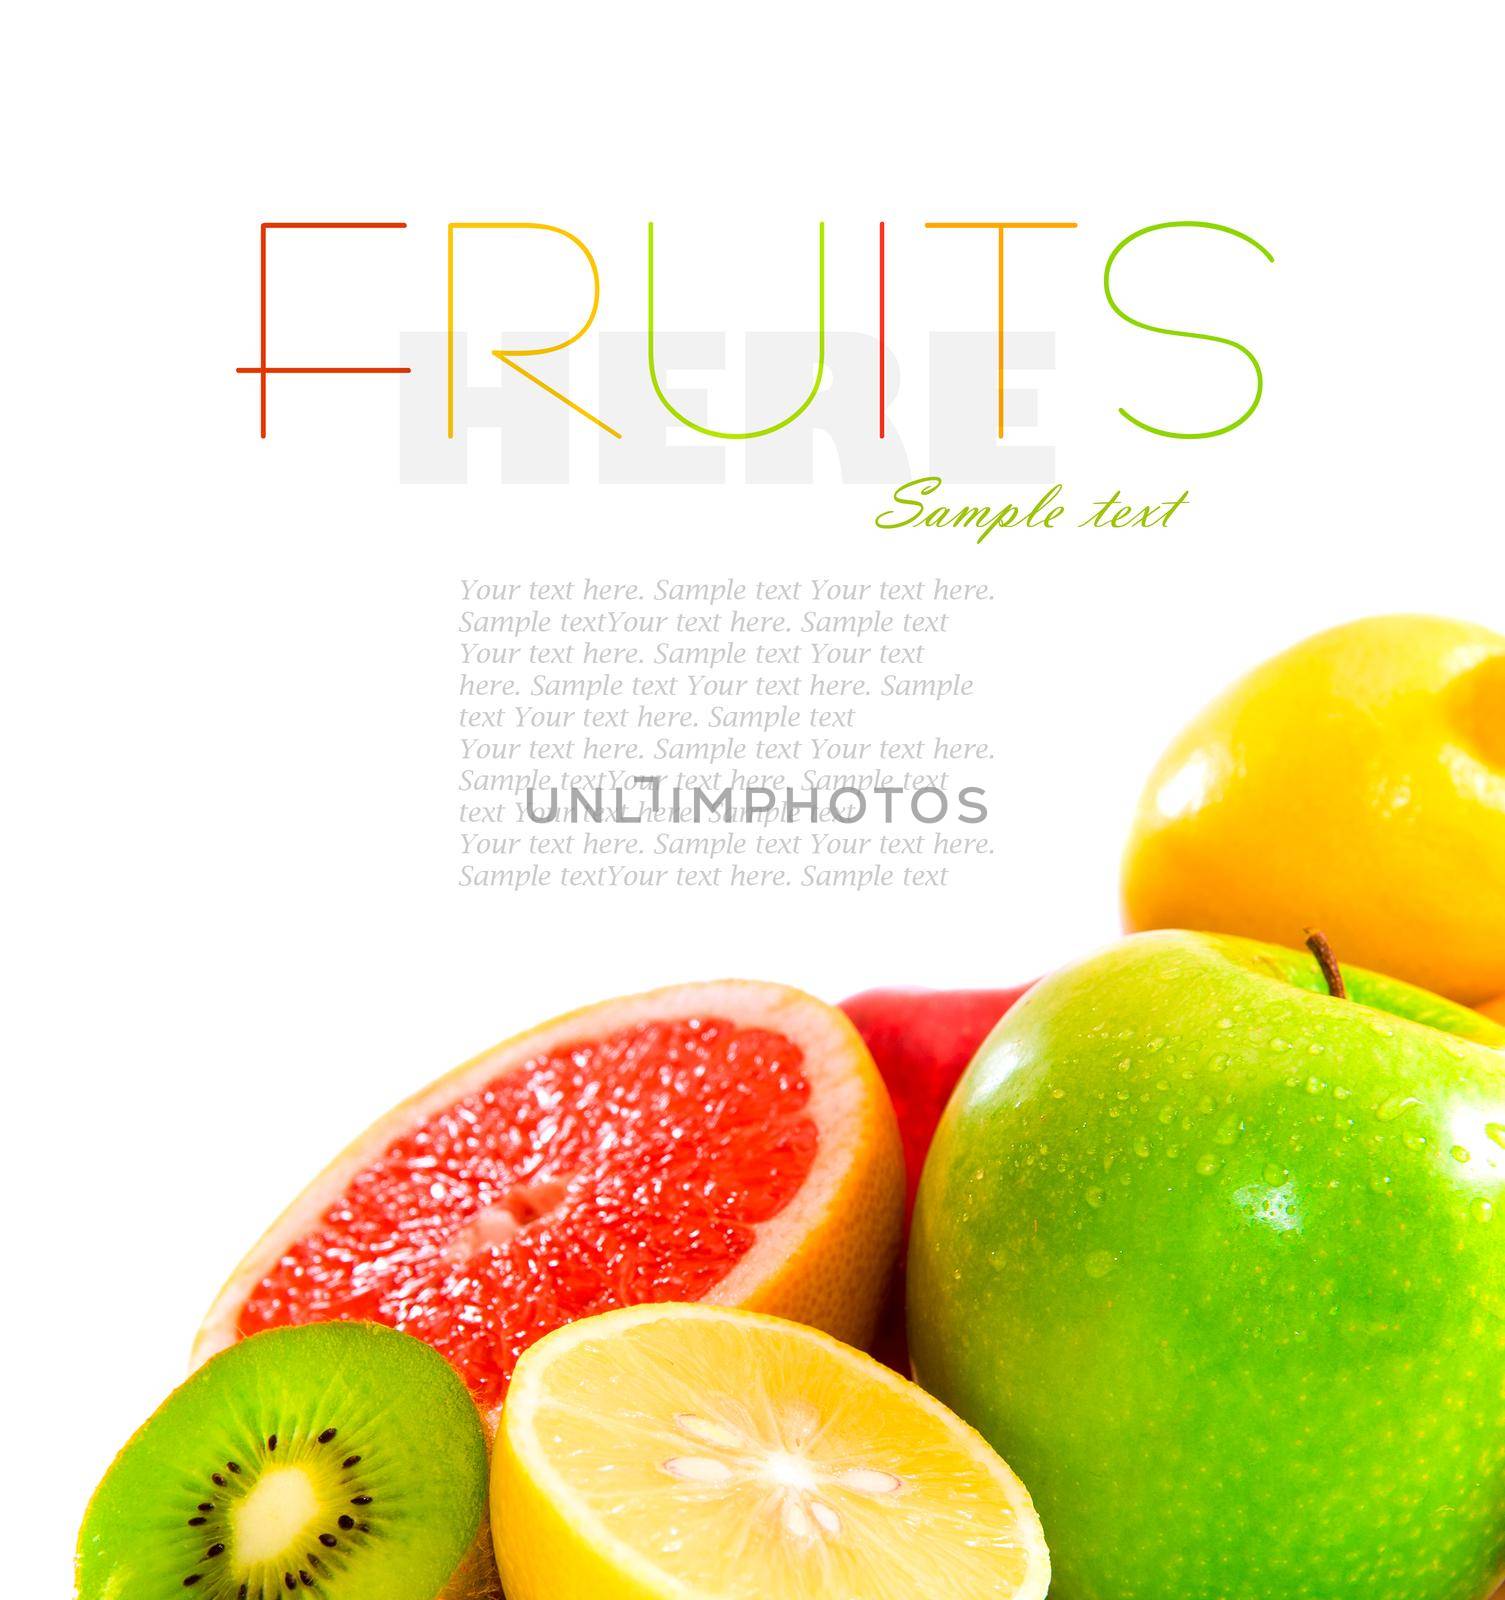 Big assortment of fruits by tan4ikk1